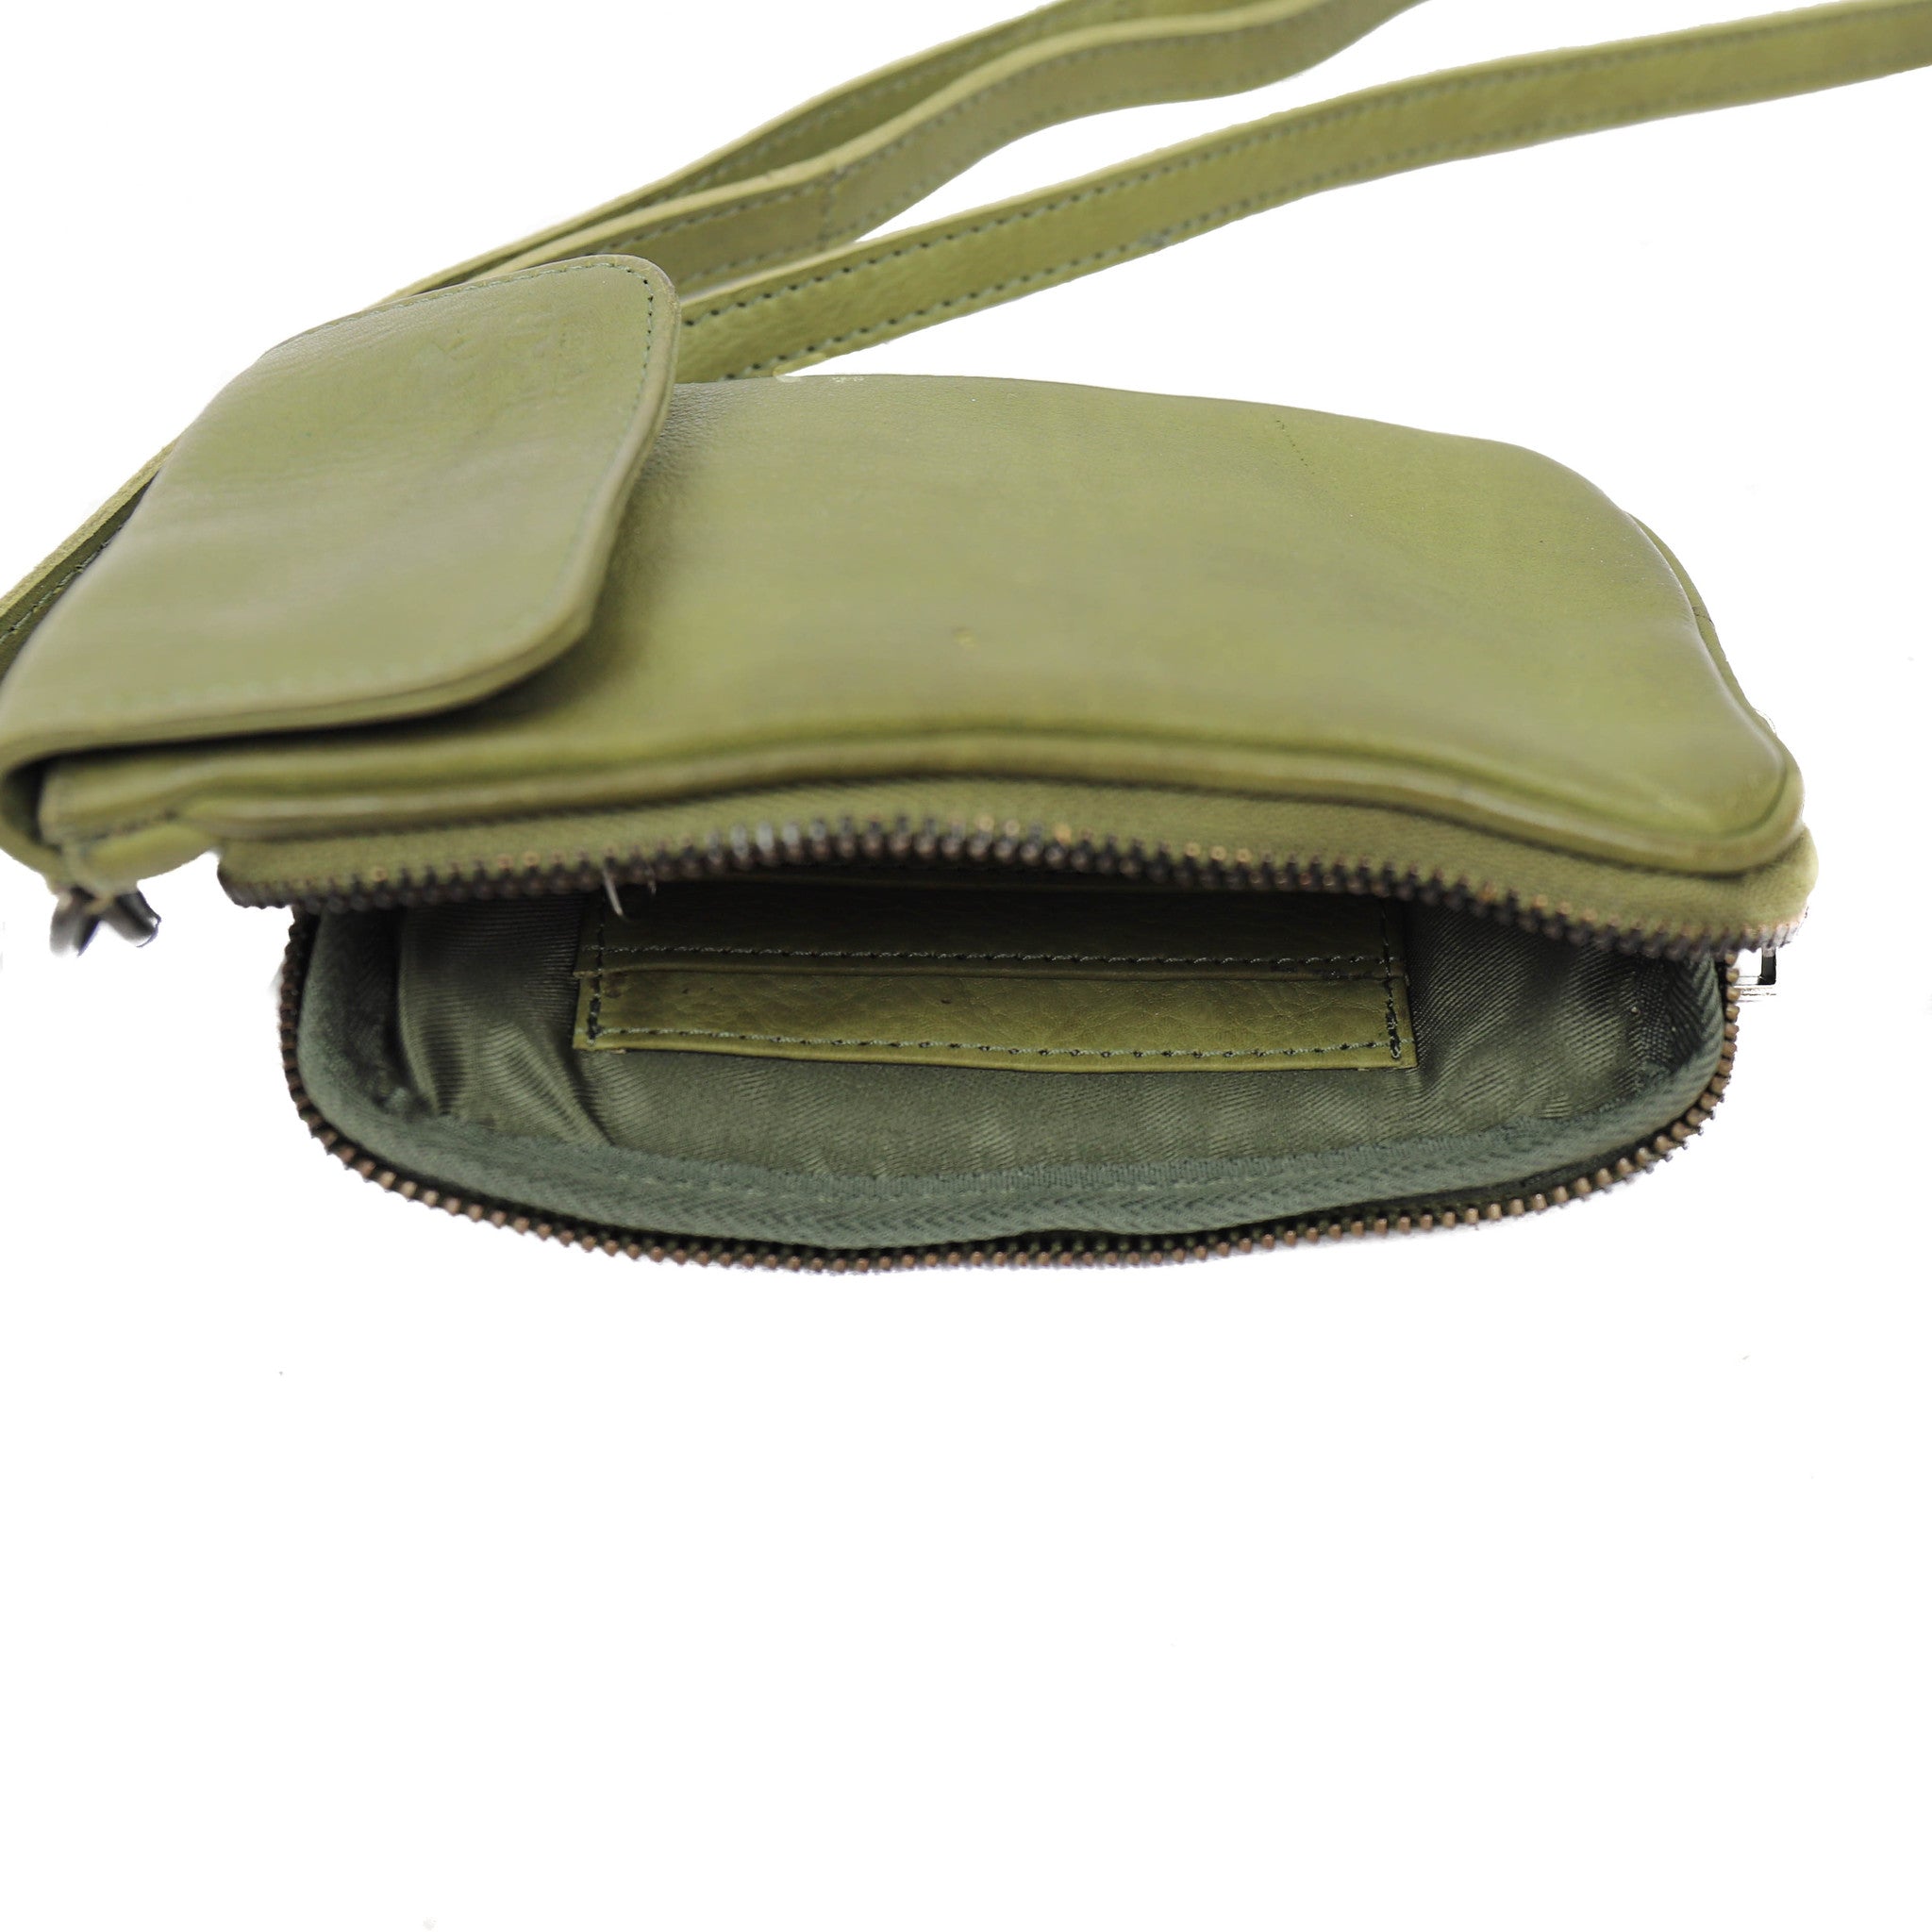 Phone bag 'Ahana' green - CP 2106